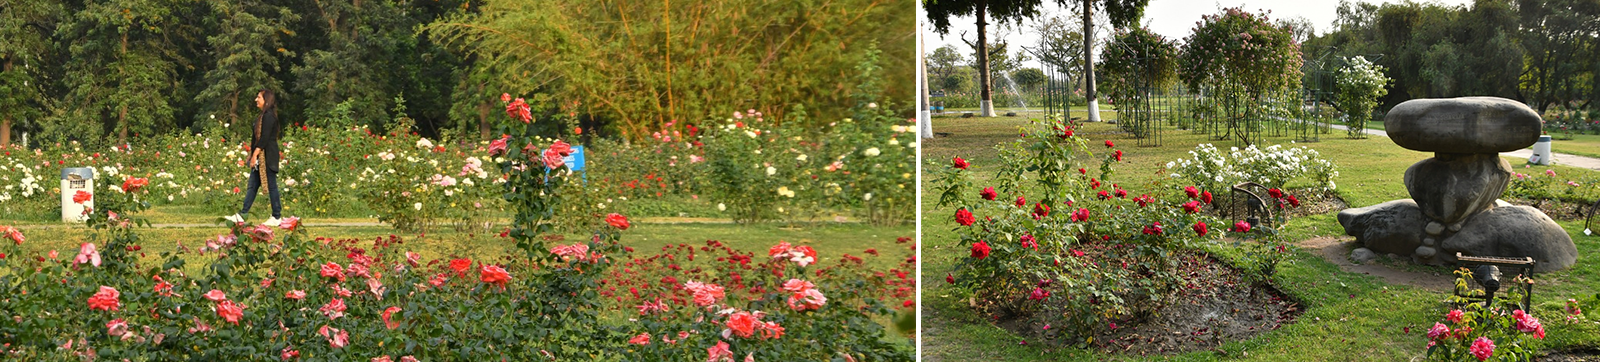 Chandigarh’s Rose Garden, the Mecca of Nature’s Bounty